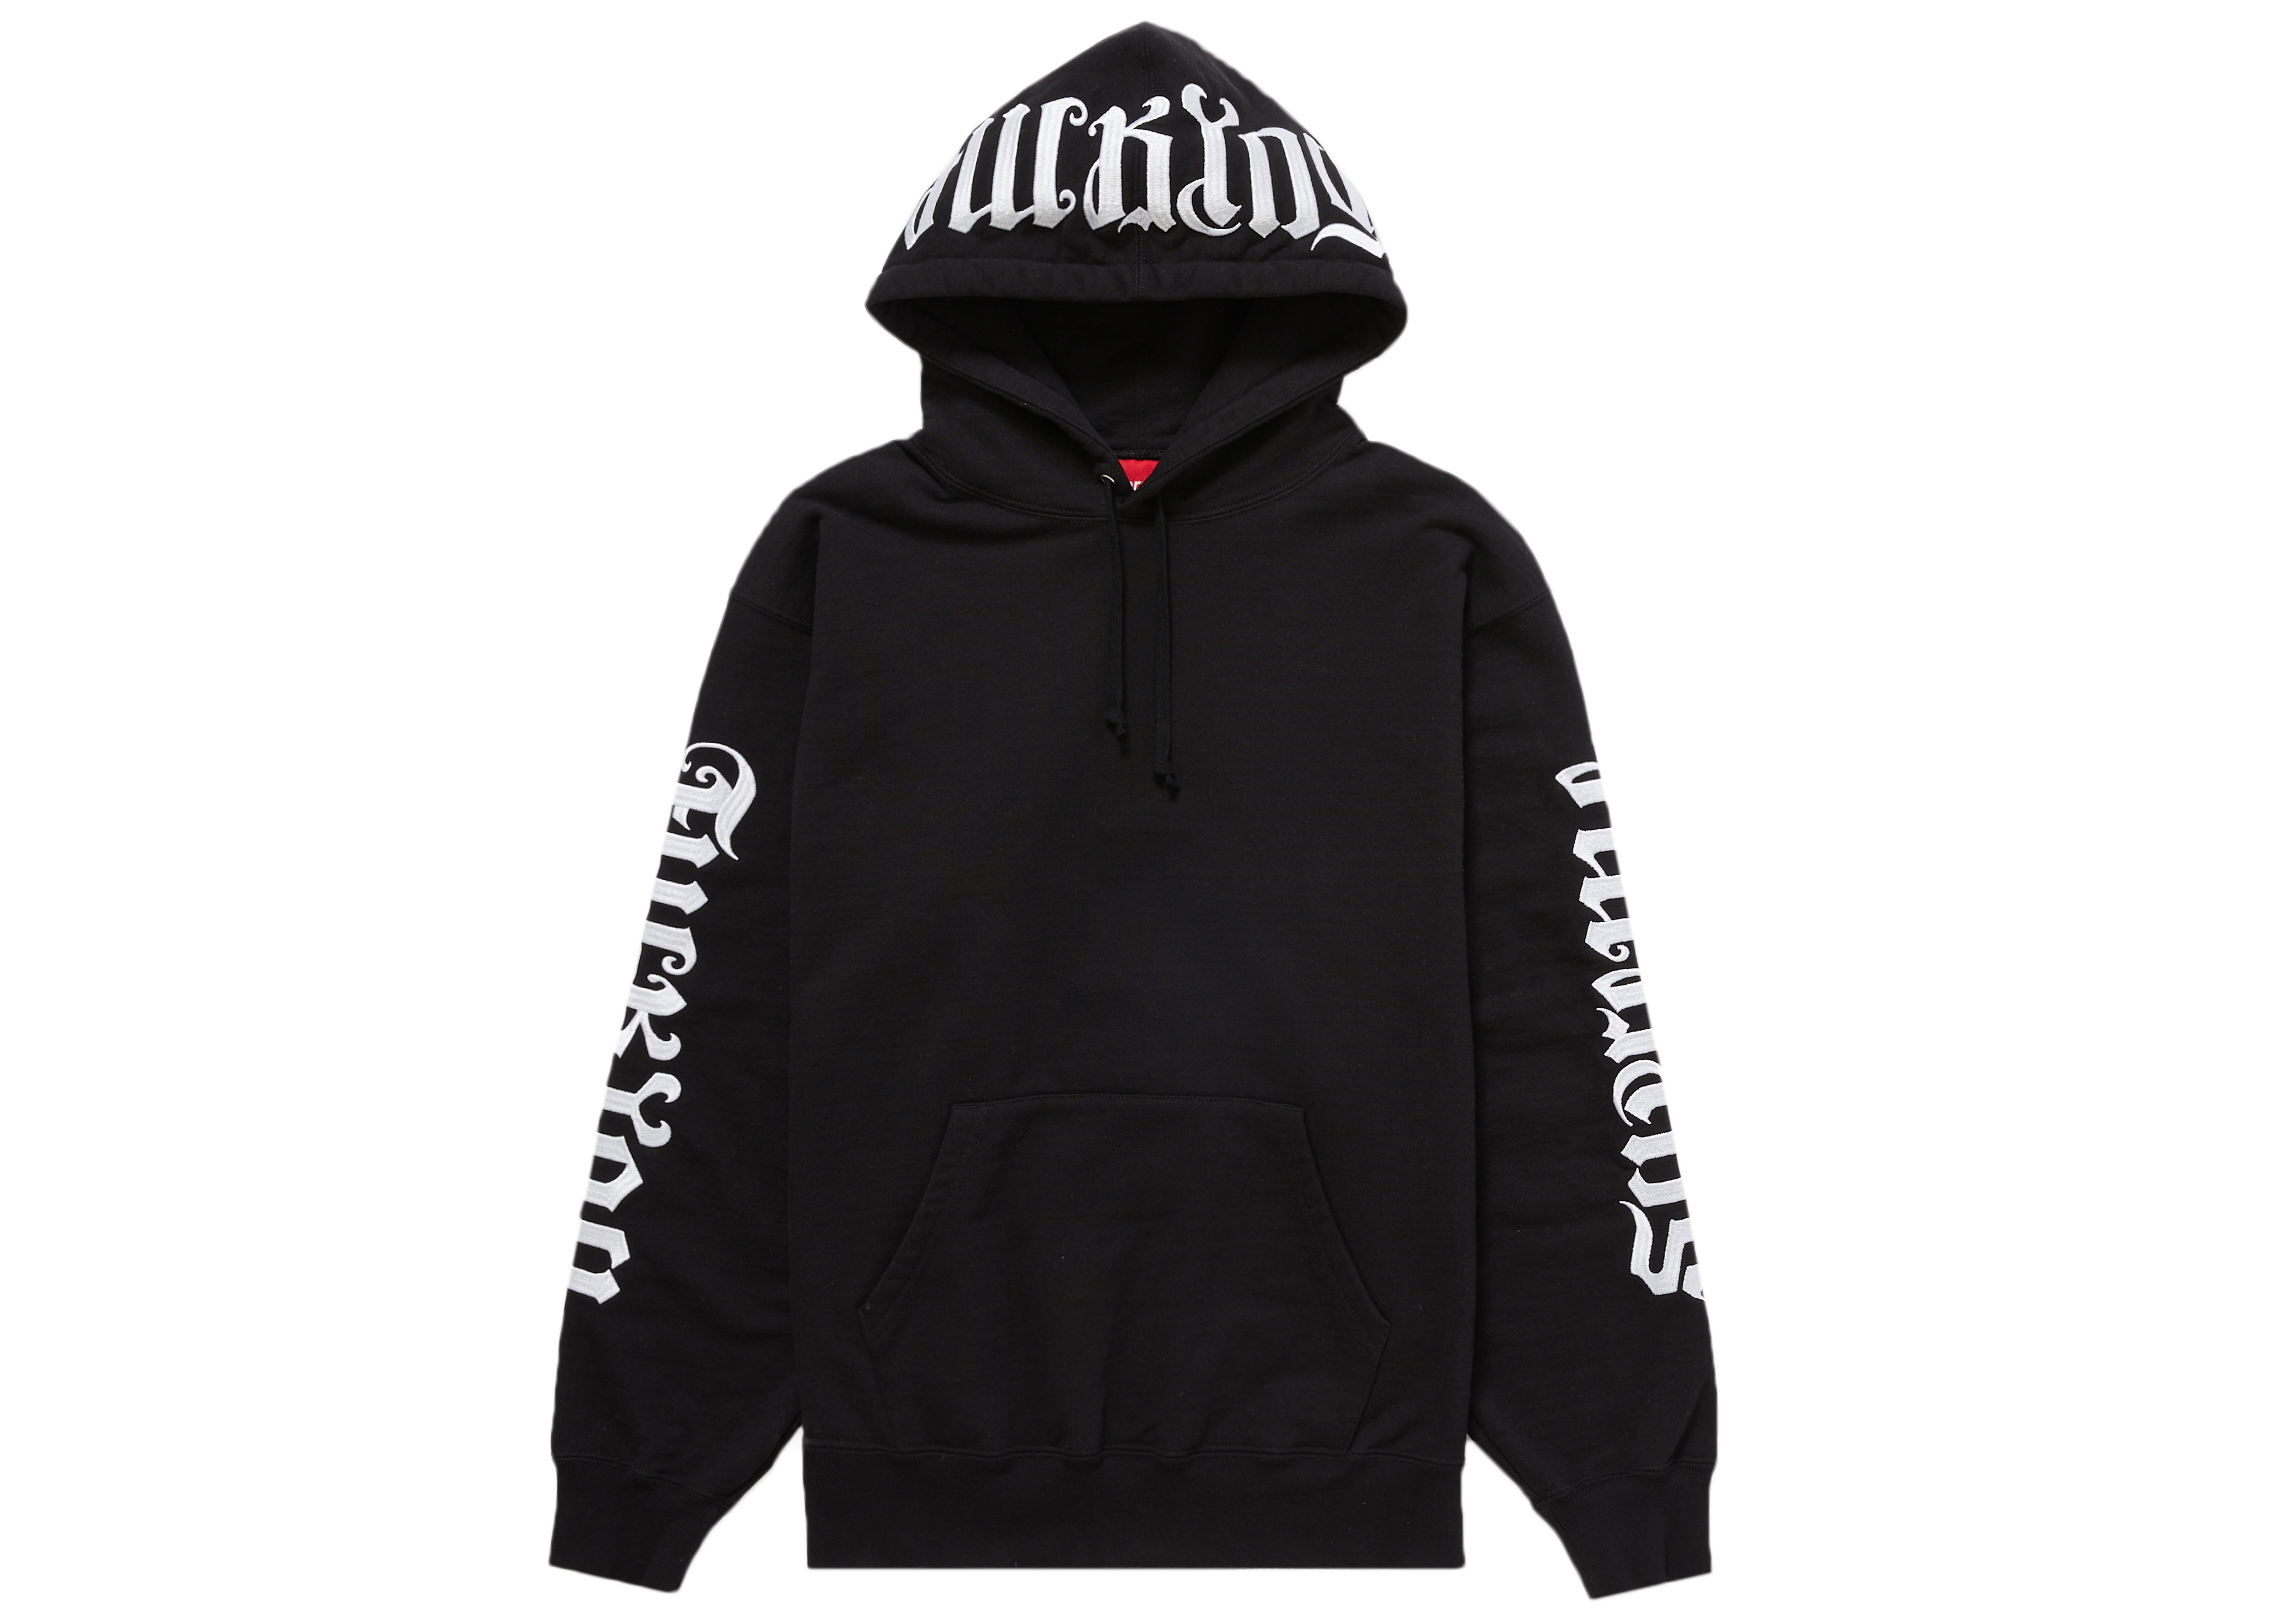 MサイズSupreme Ambigram Hooded Sweatshirt Black